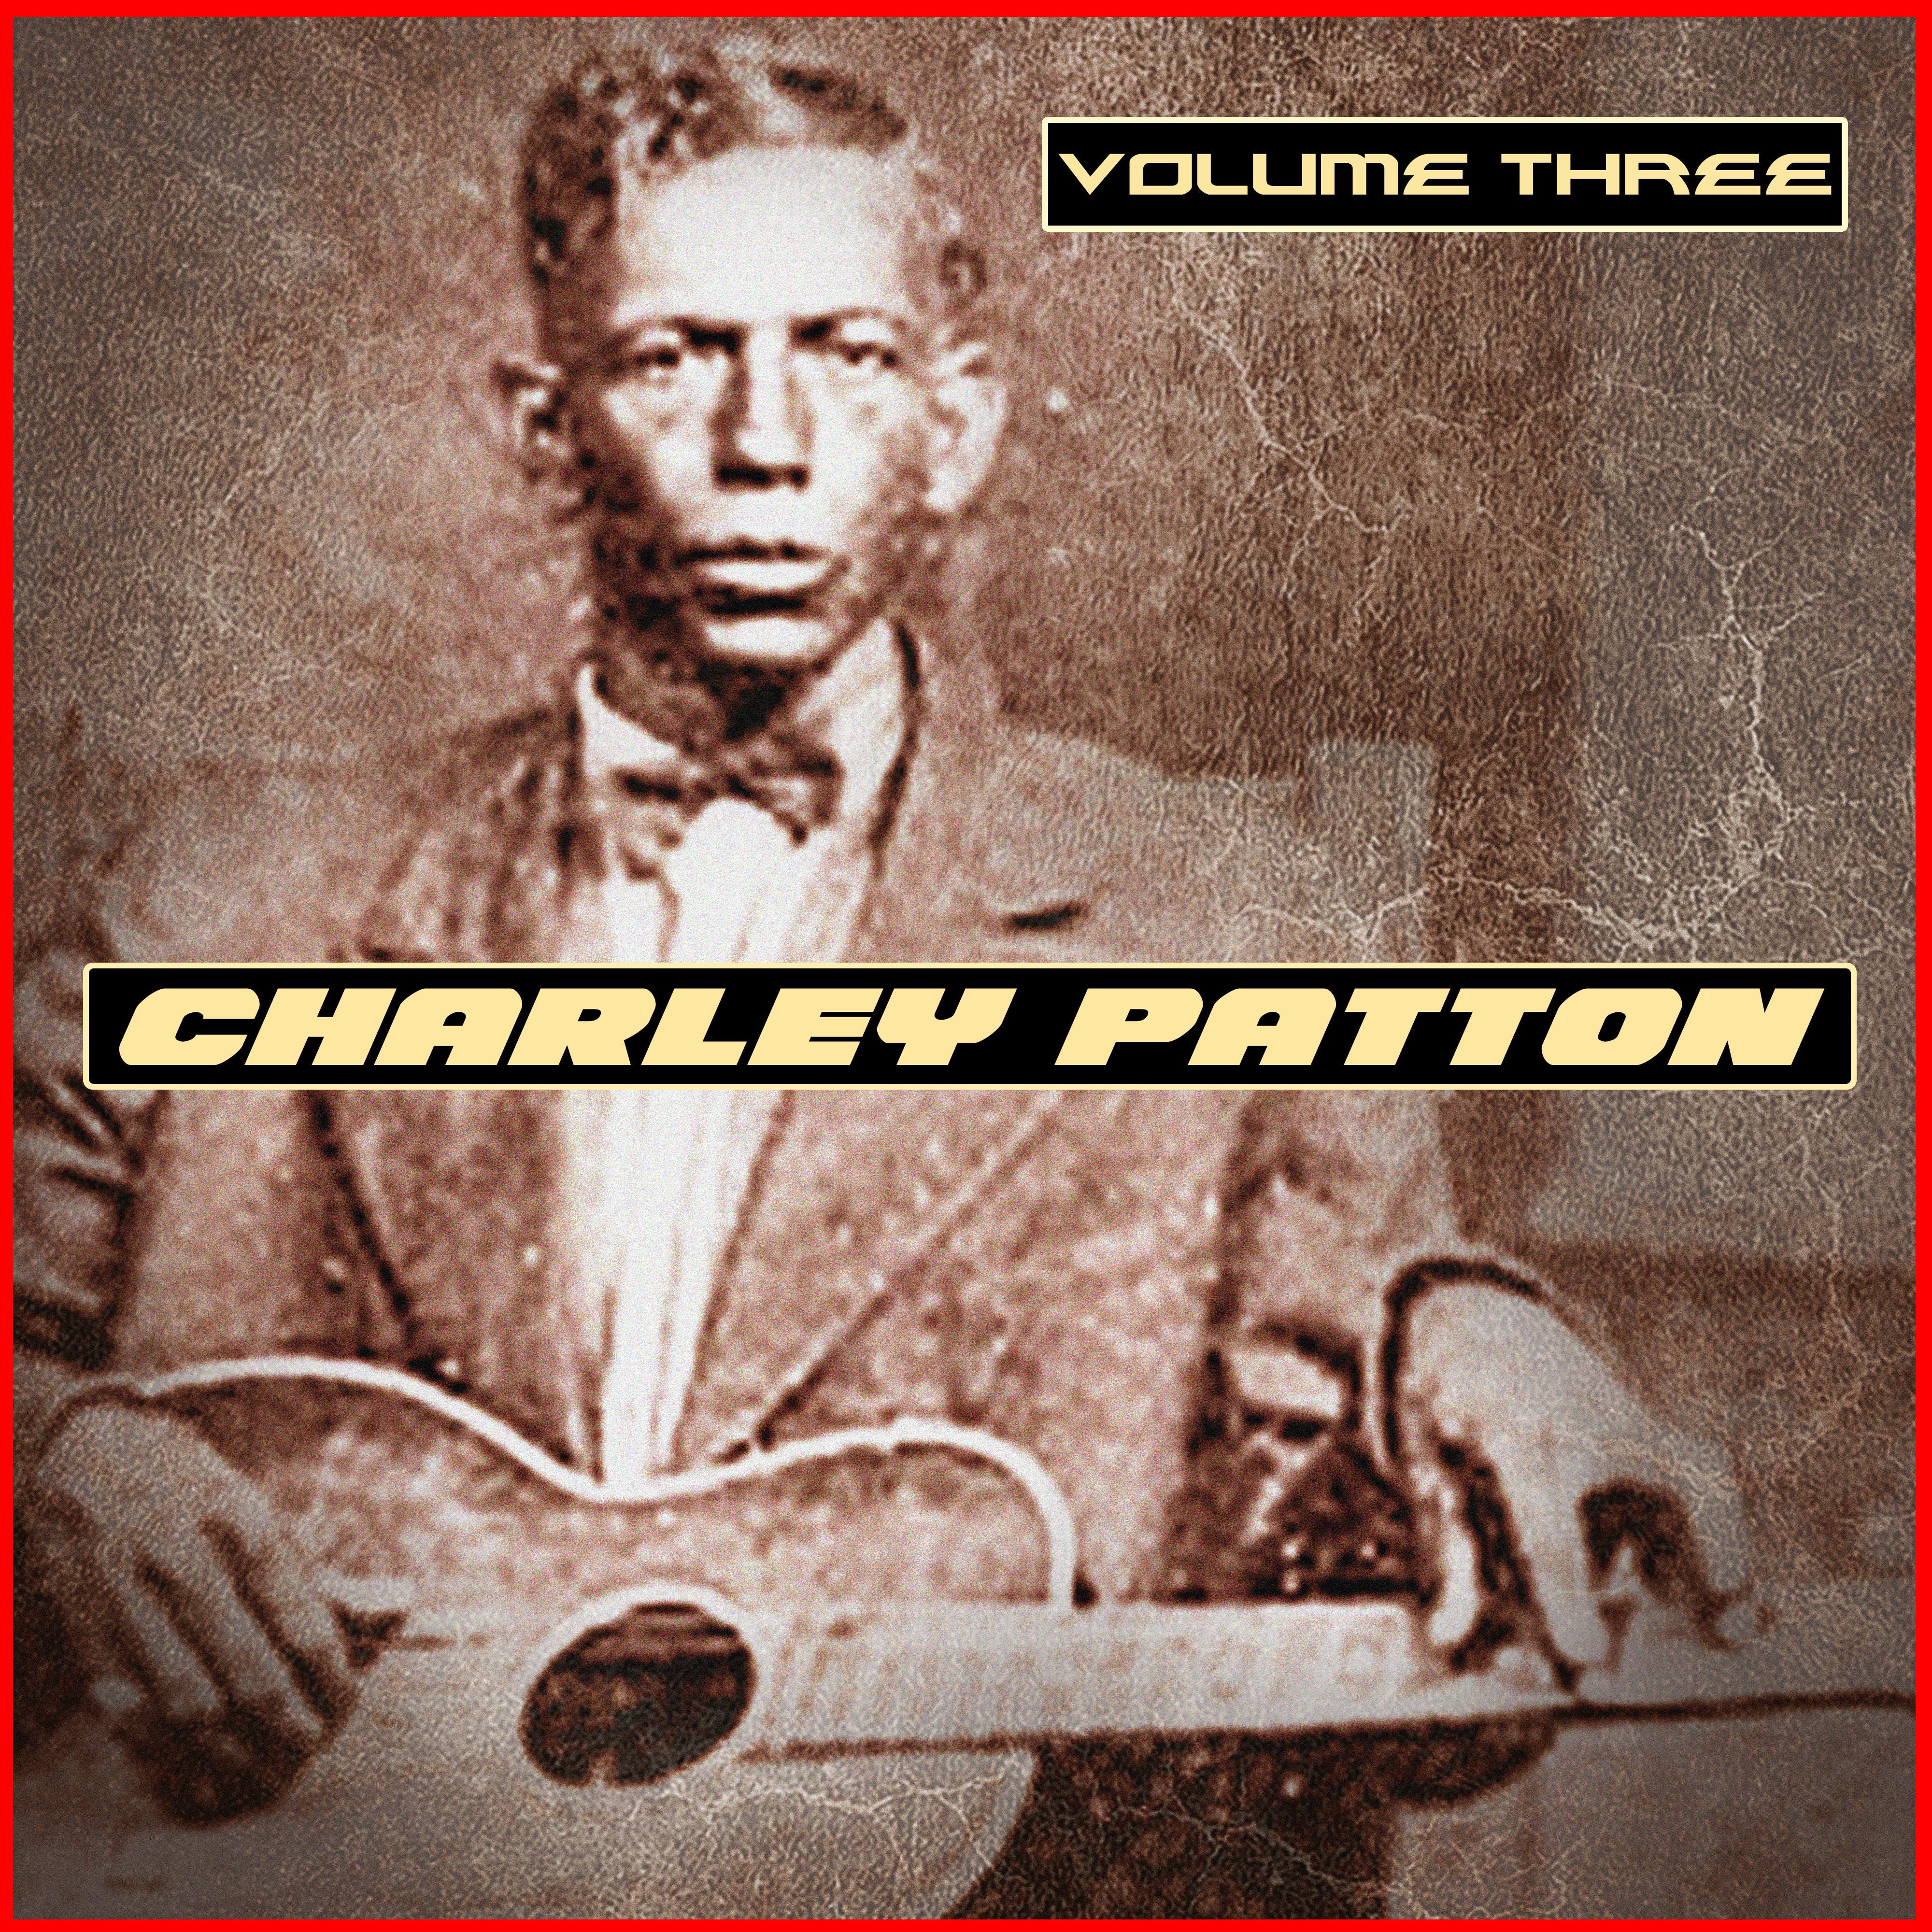 Charley Patton Volume Three